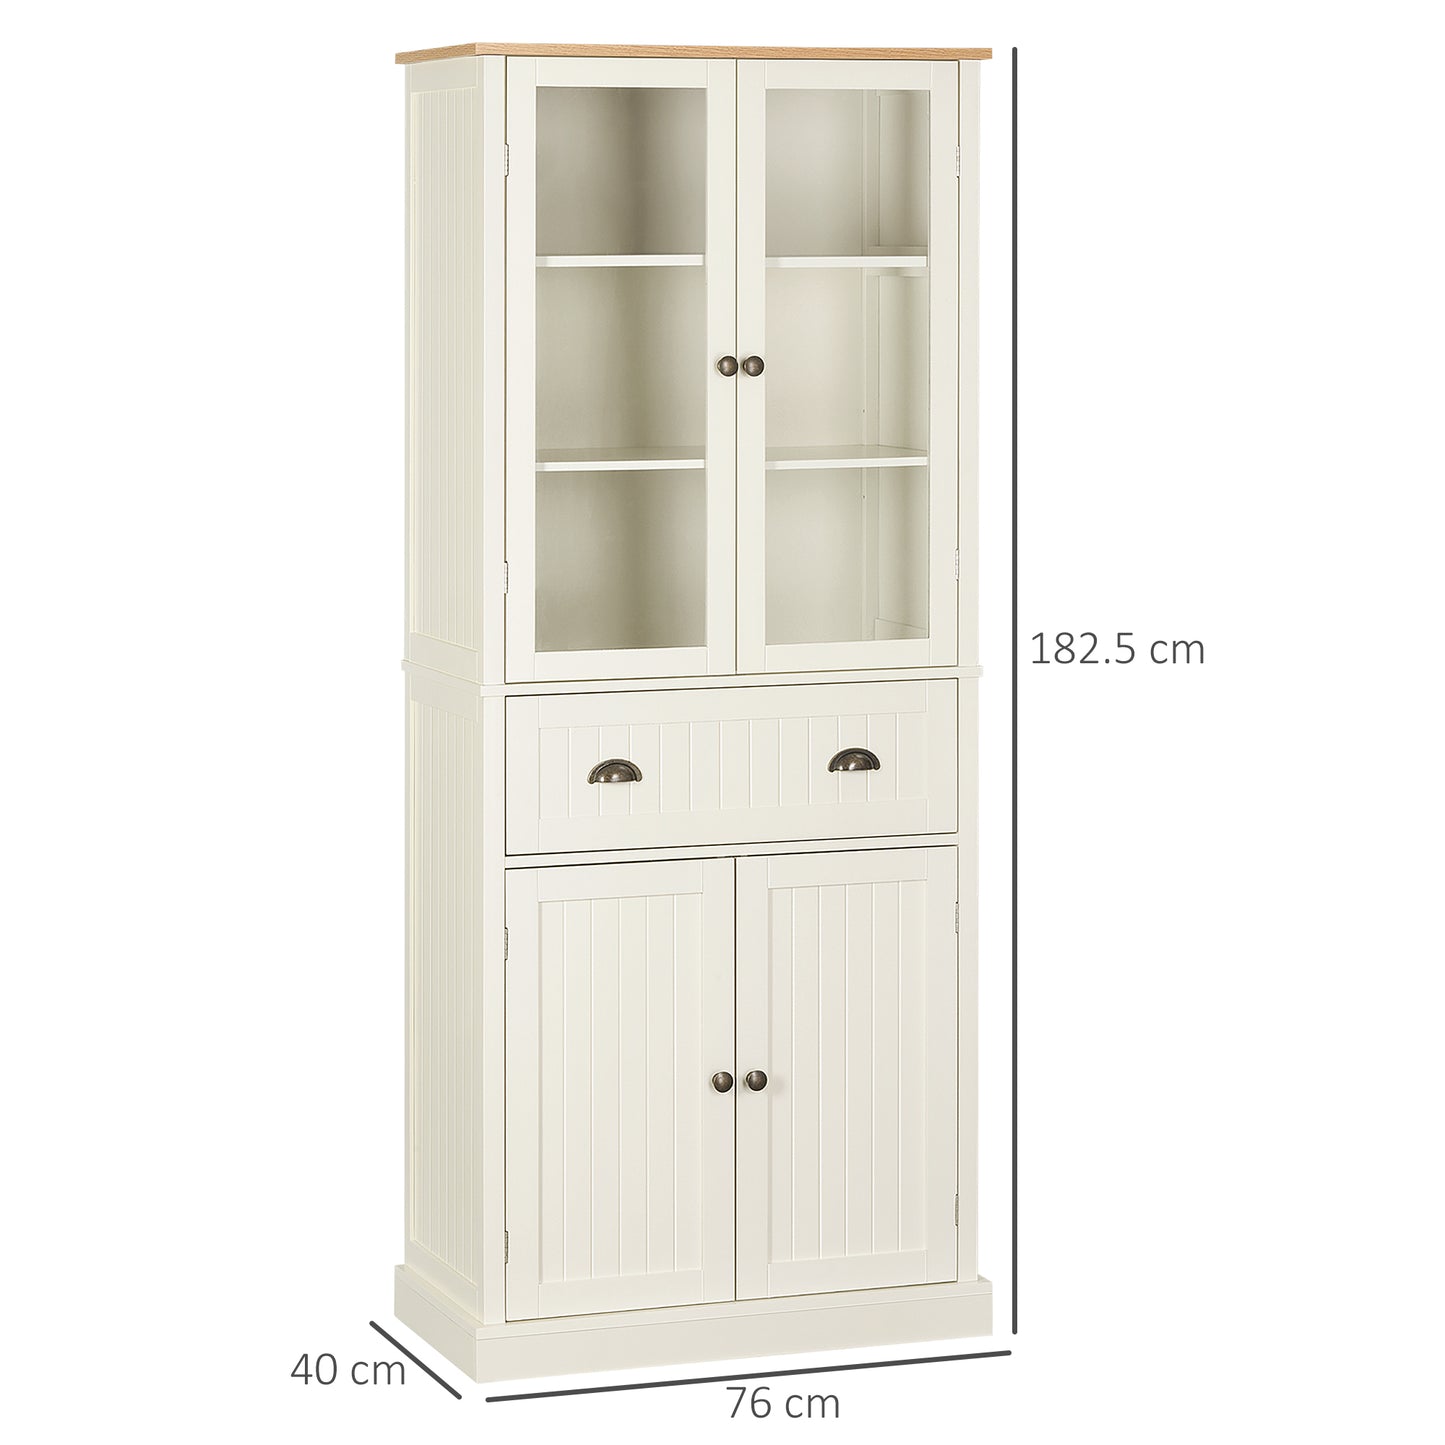 HOMCOM Freestanding Kitchen Cupboard, 5-tier Storage Cabinet with Adjustable Shelves and Drawer, Cream White